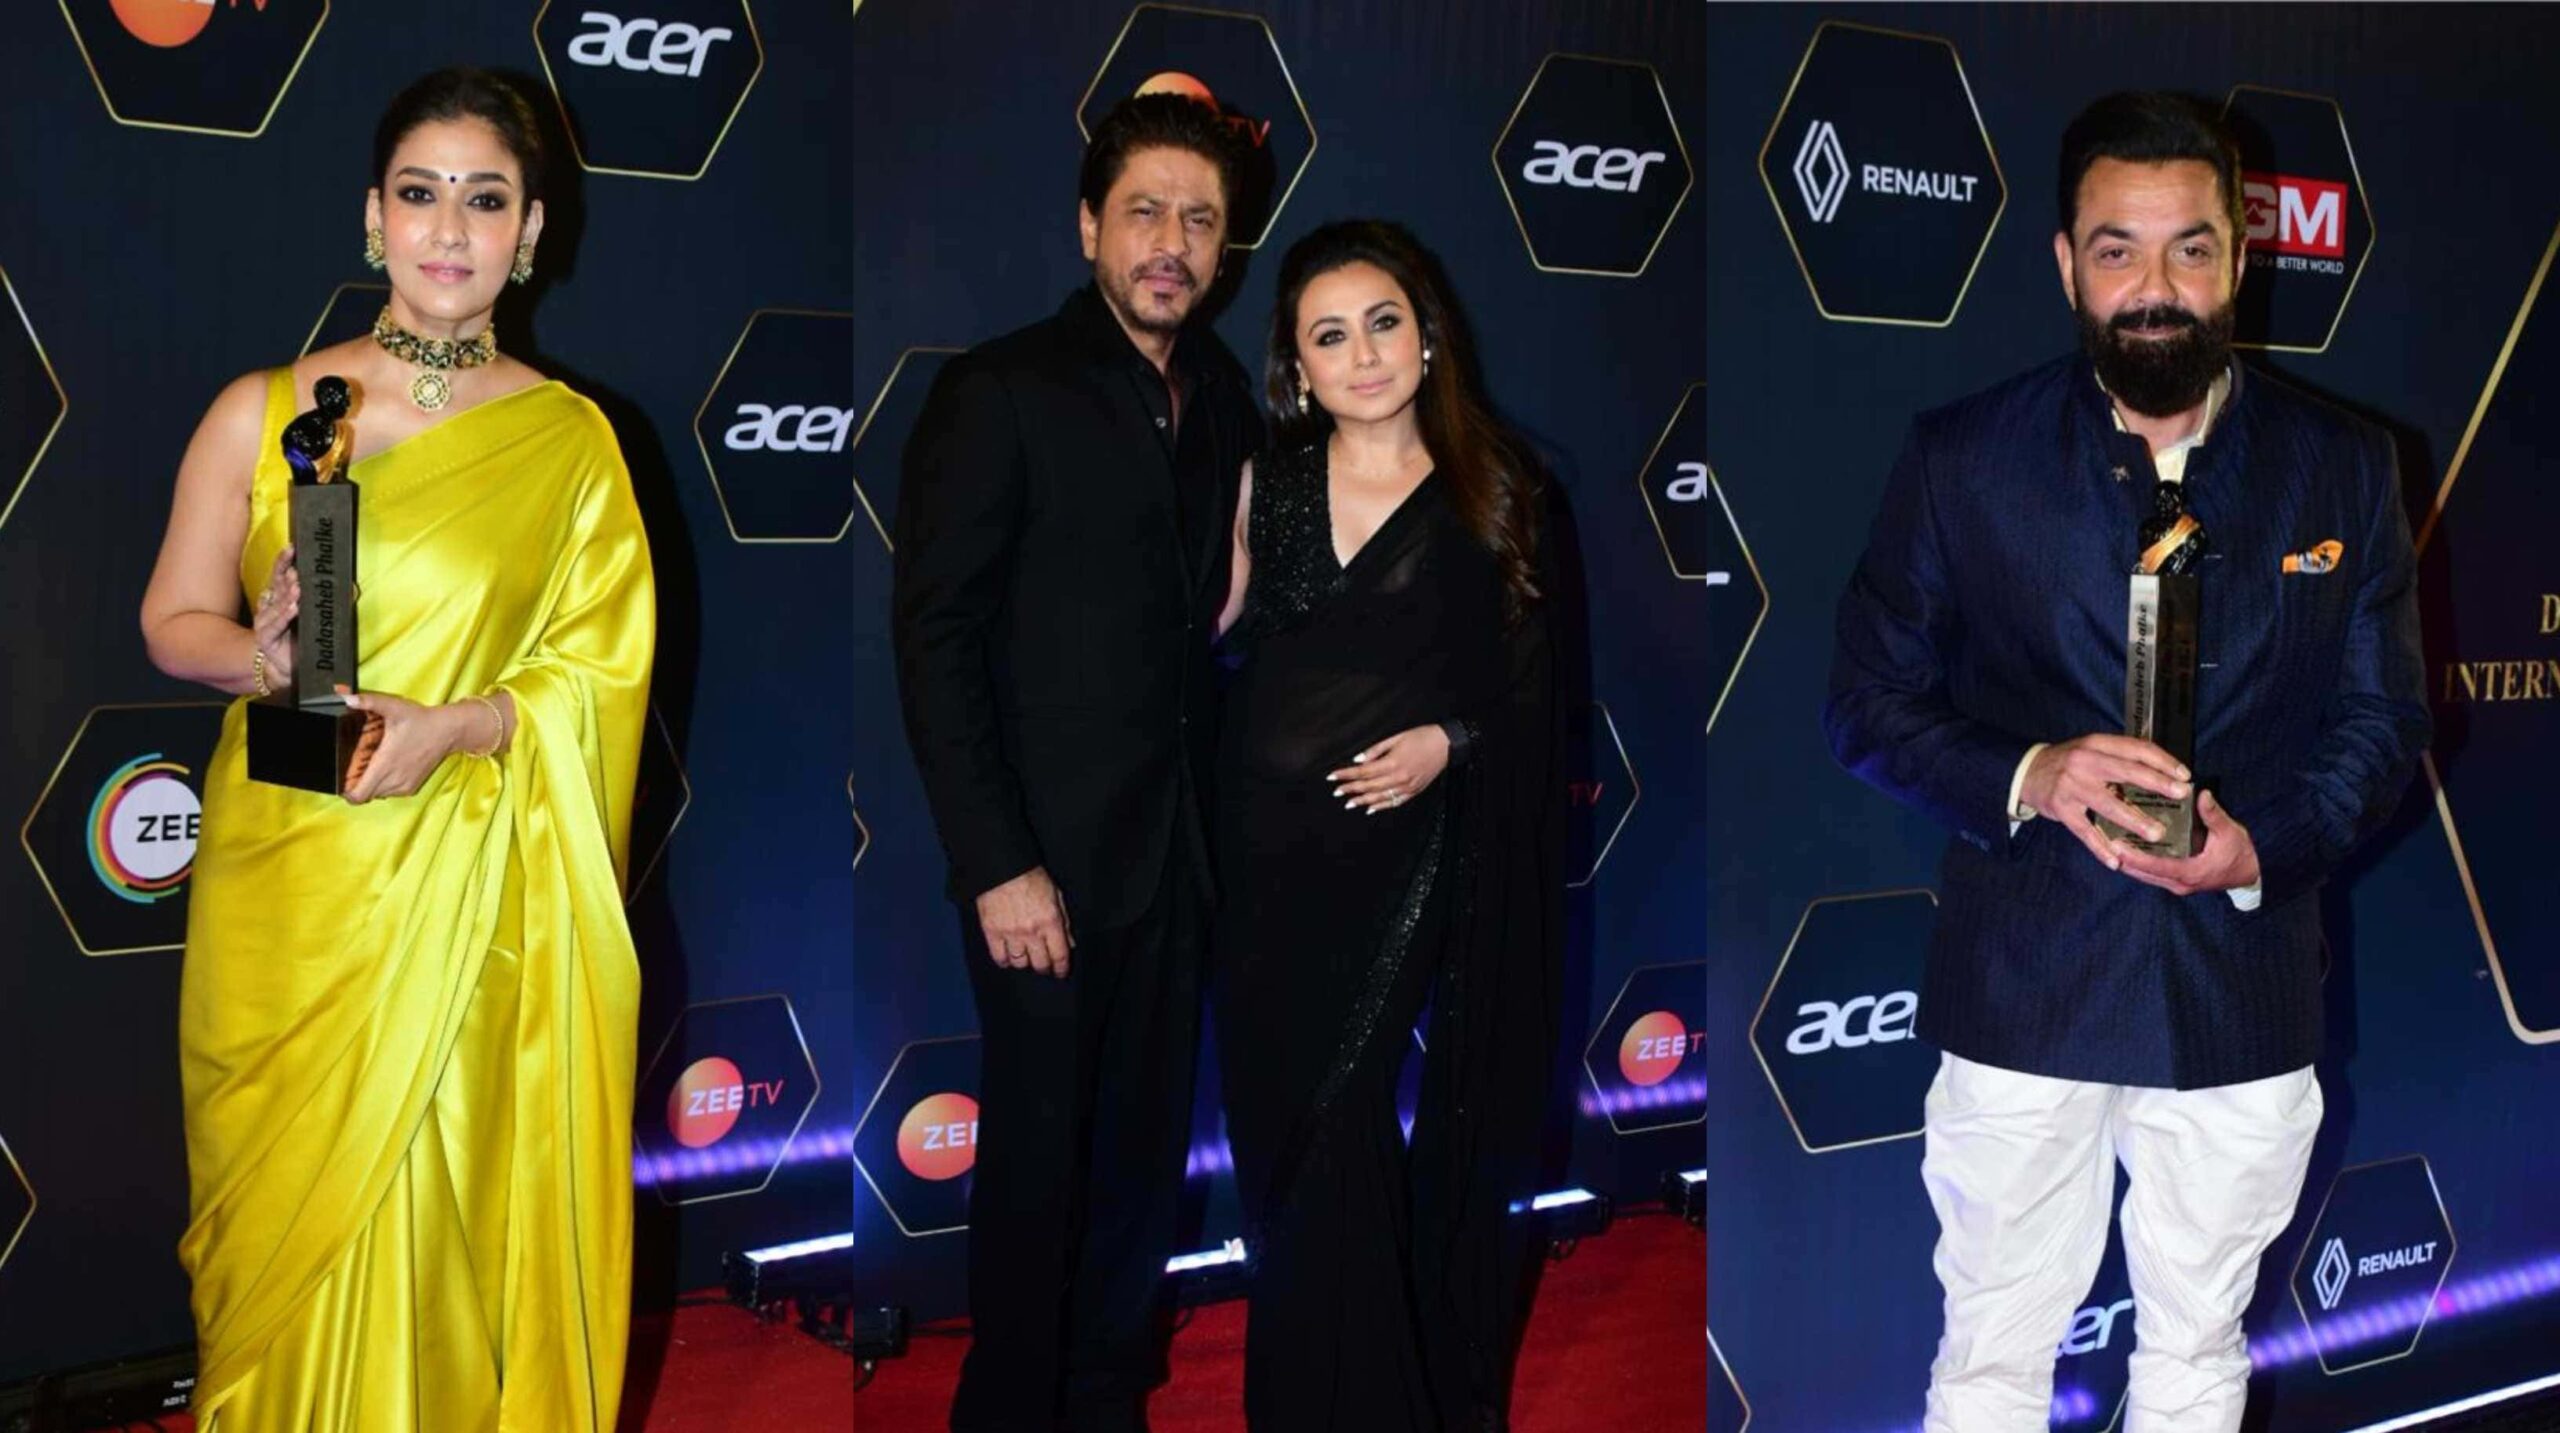 Dadasaheb Phalke International Film Festival Awards 2024 – SRK